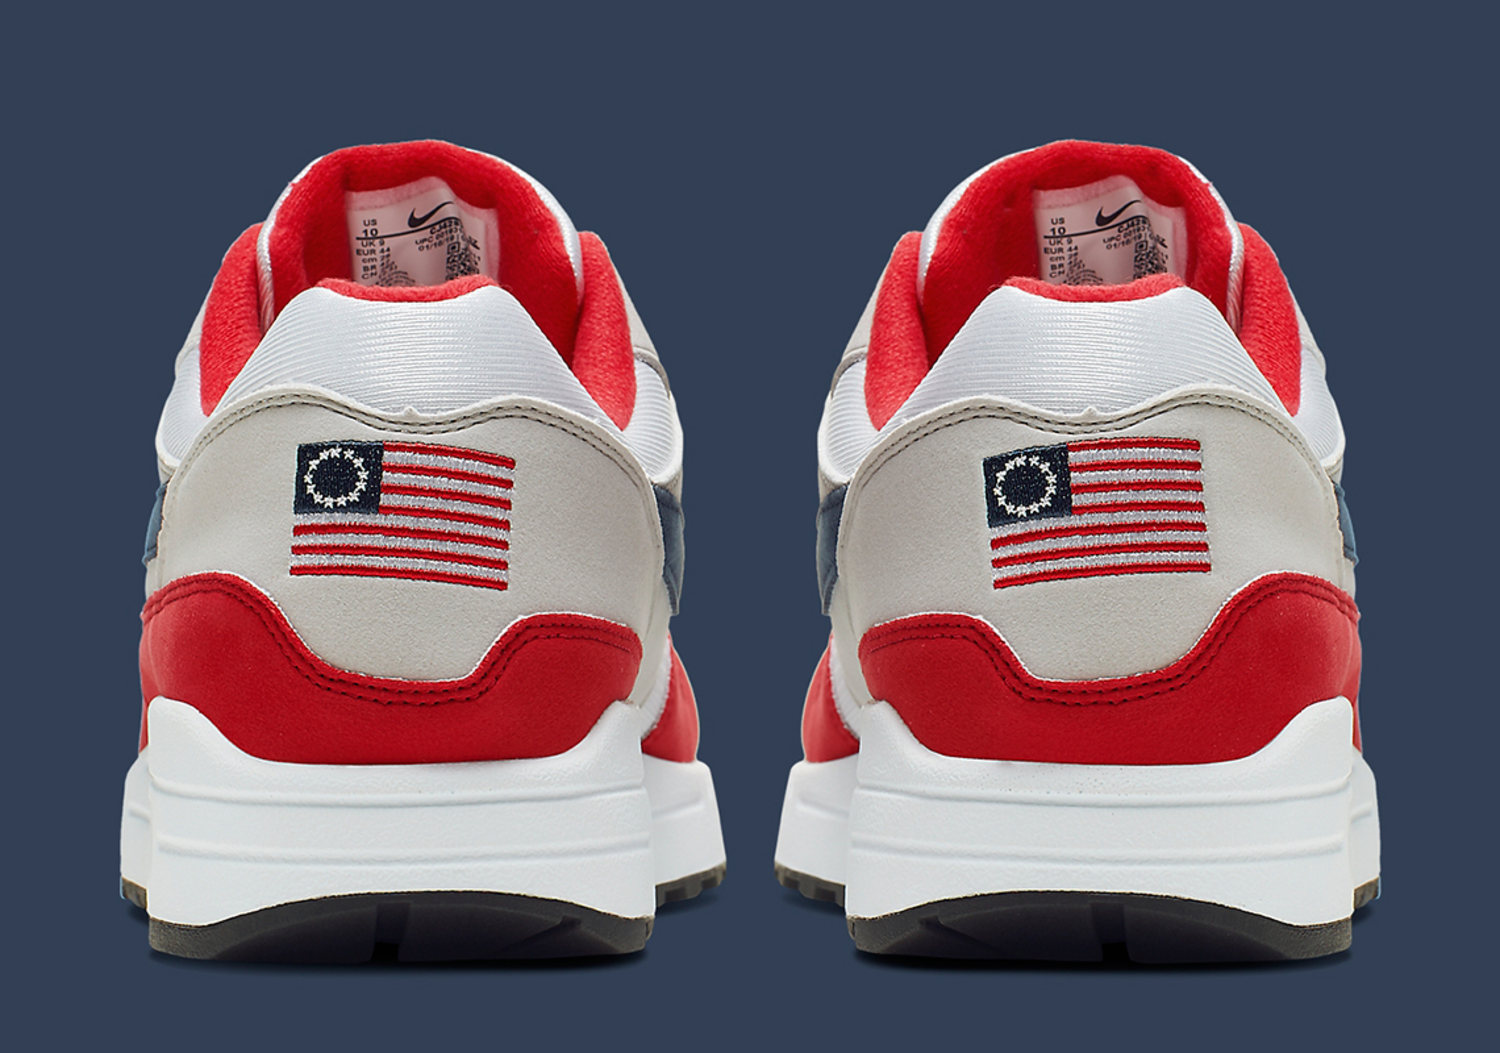 En necesidad de Editor carne Nike pulls Betsy Ross flag shoes after Kaepernick complaint, report says